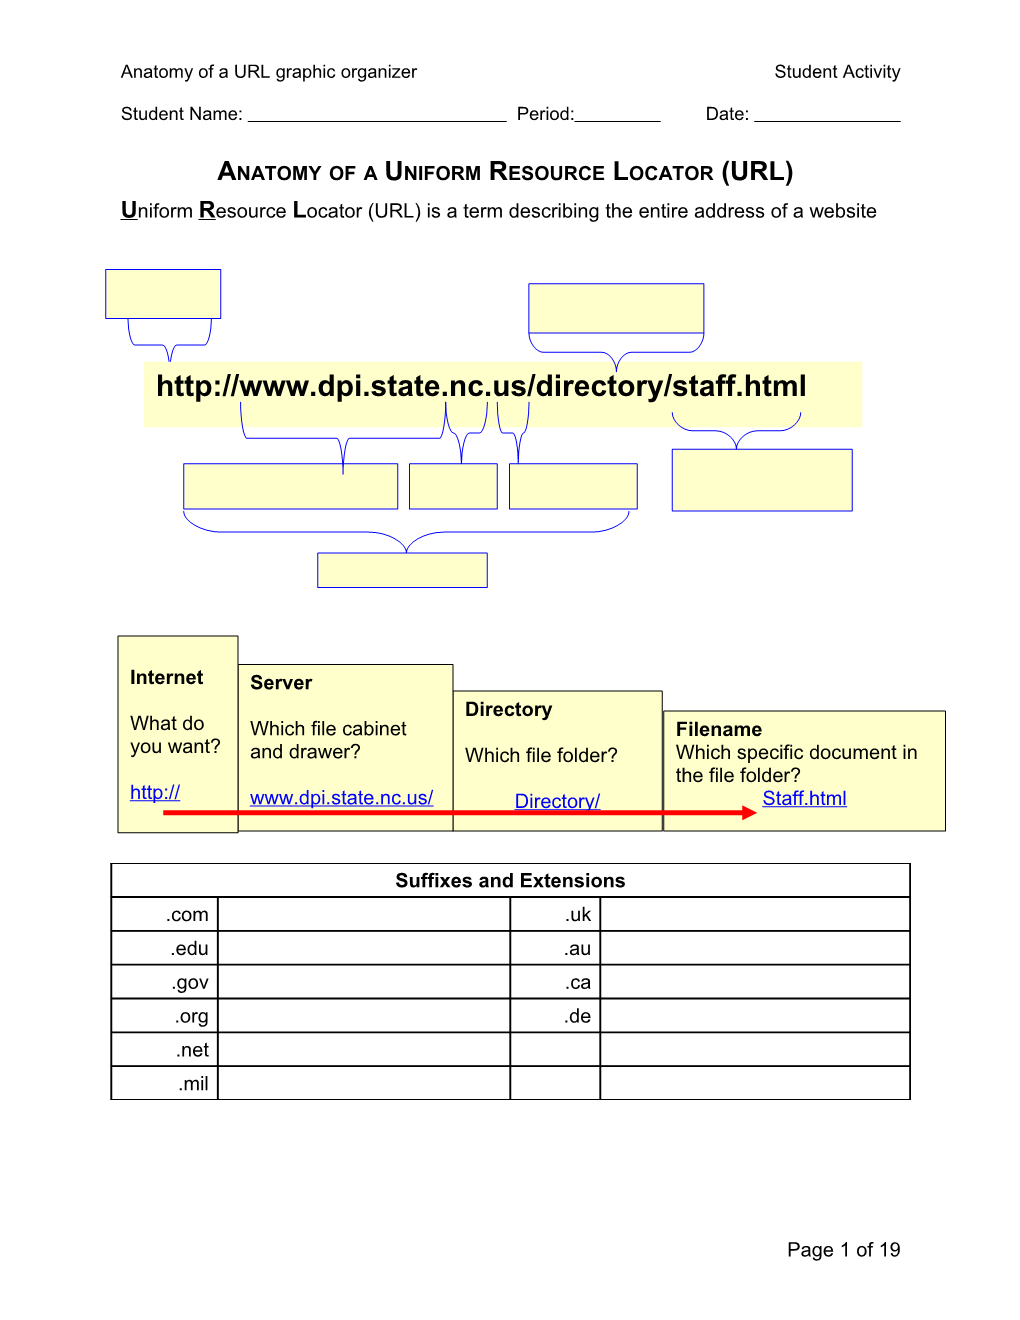 Anatomy of a Uniform Resource Locator (Url)